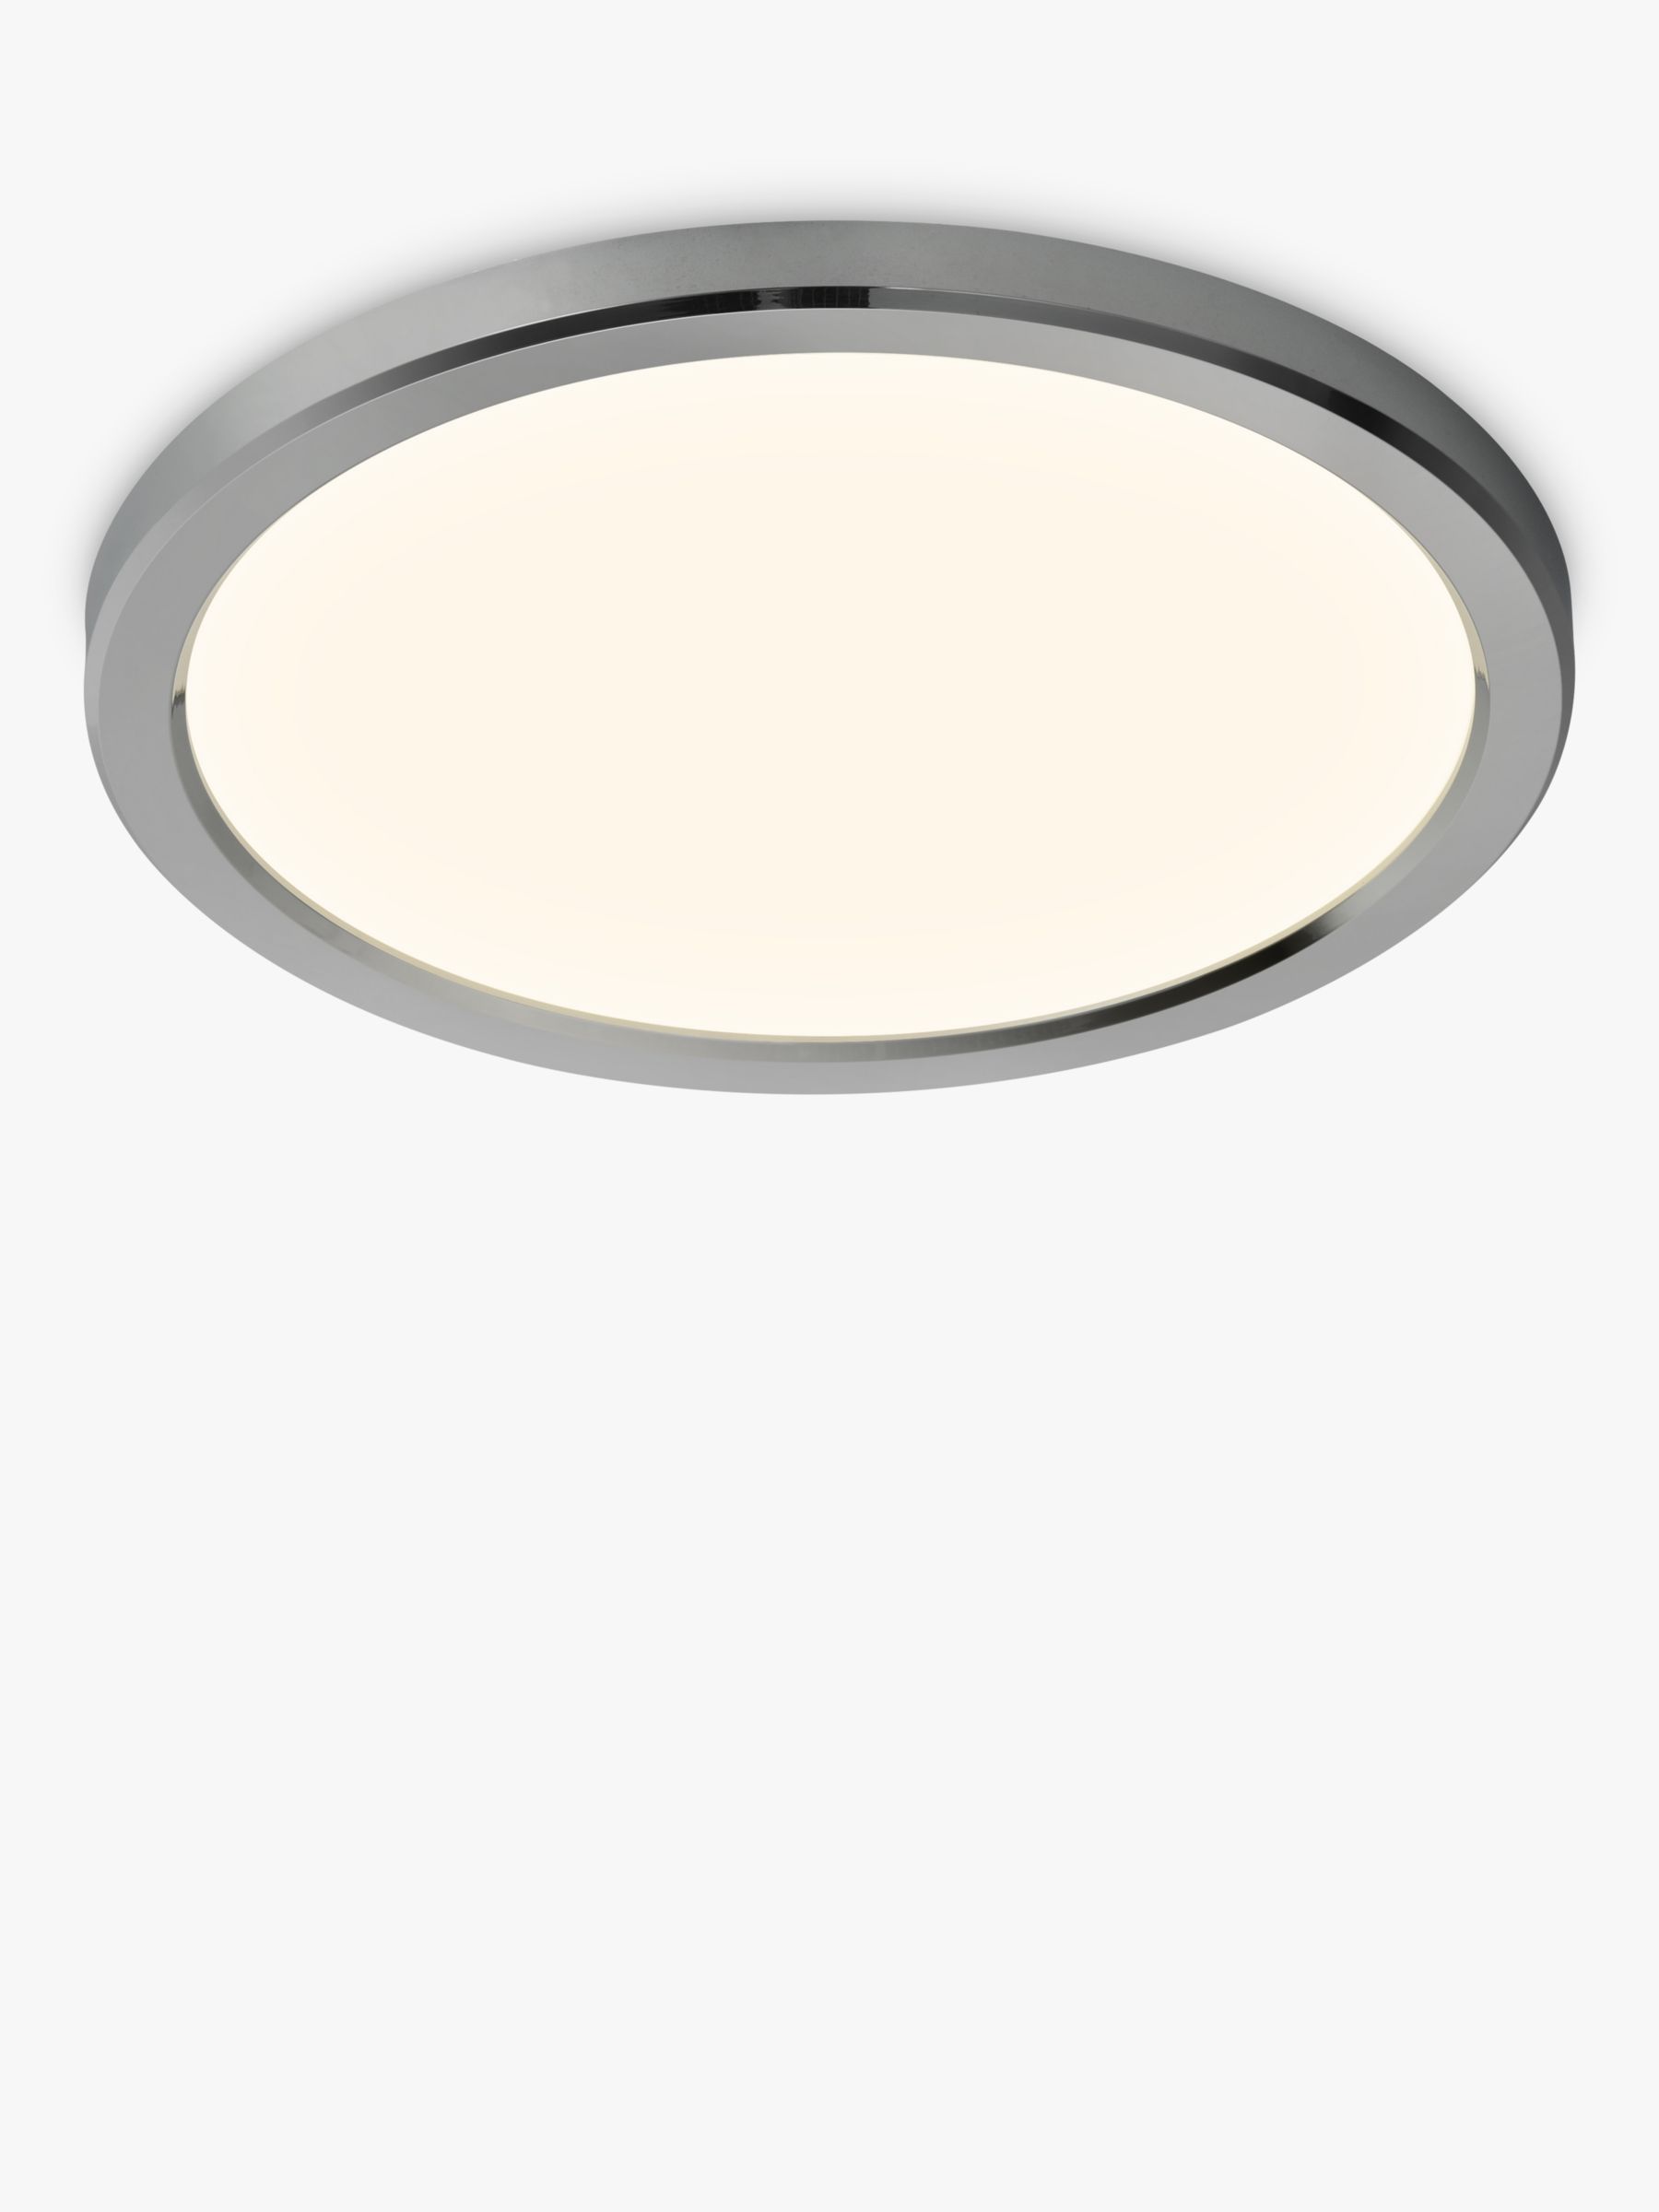 Photo of Nordlux oja 29 flush bathroom ceiling light white/chrome